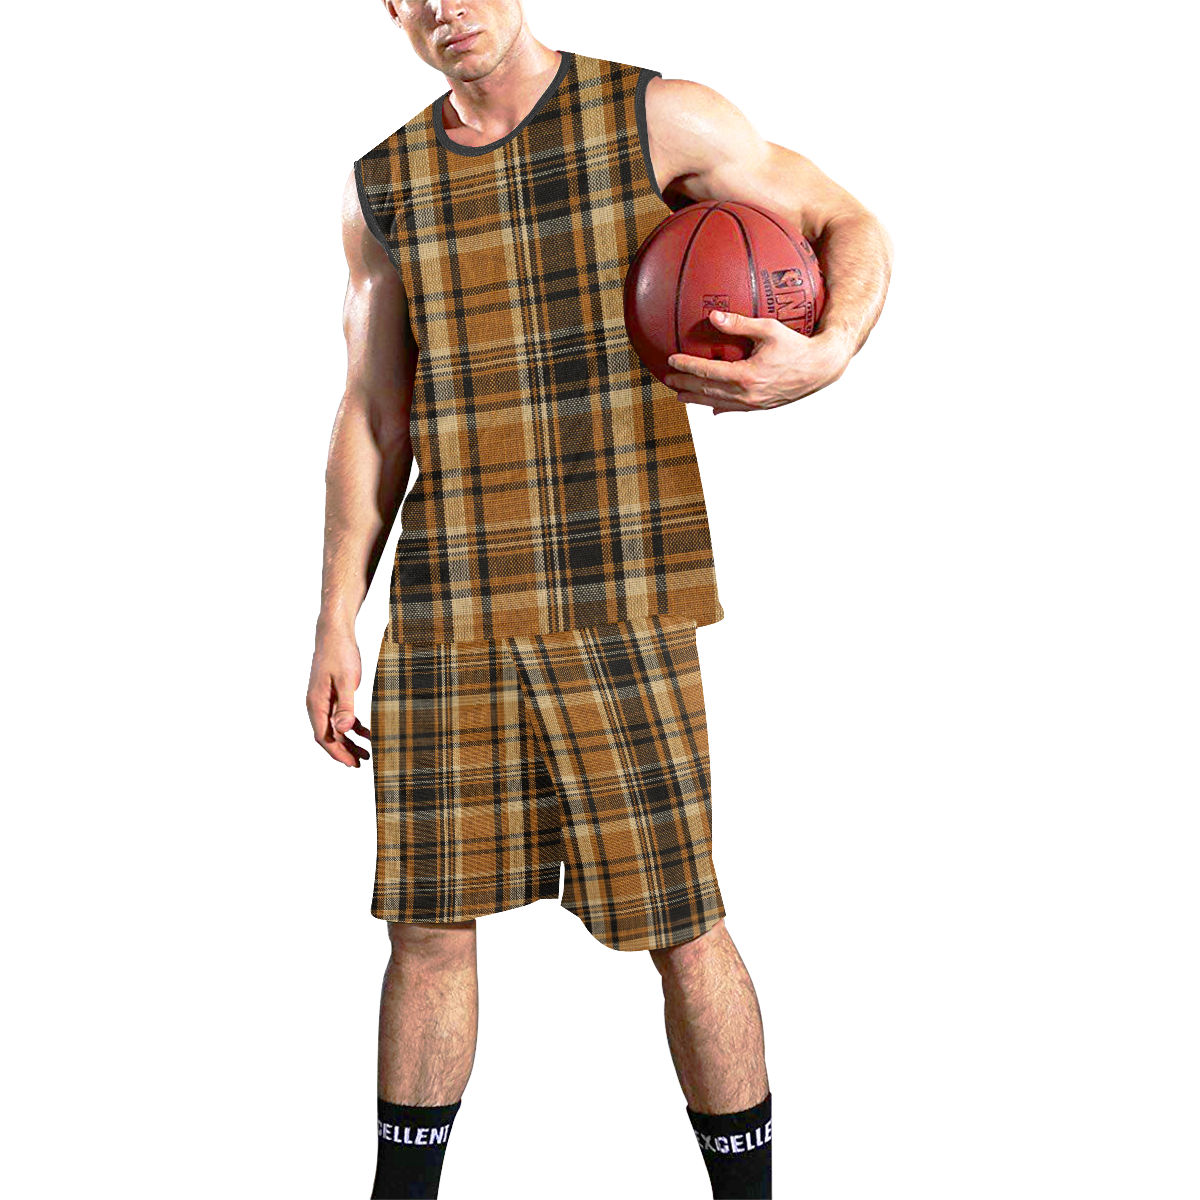 TARTAN DESIGN All Over Print Basketball Uniform